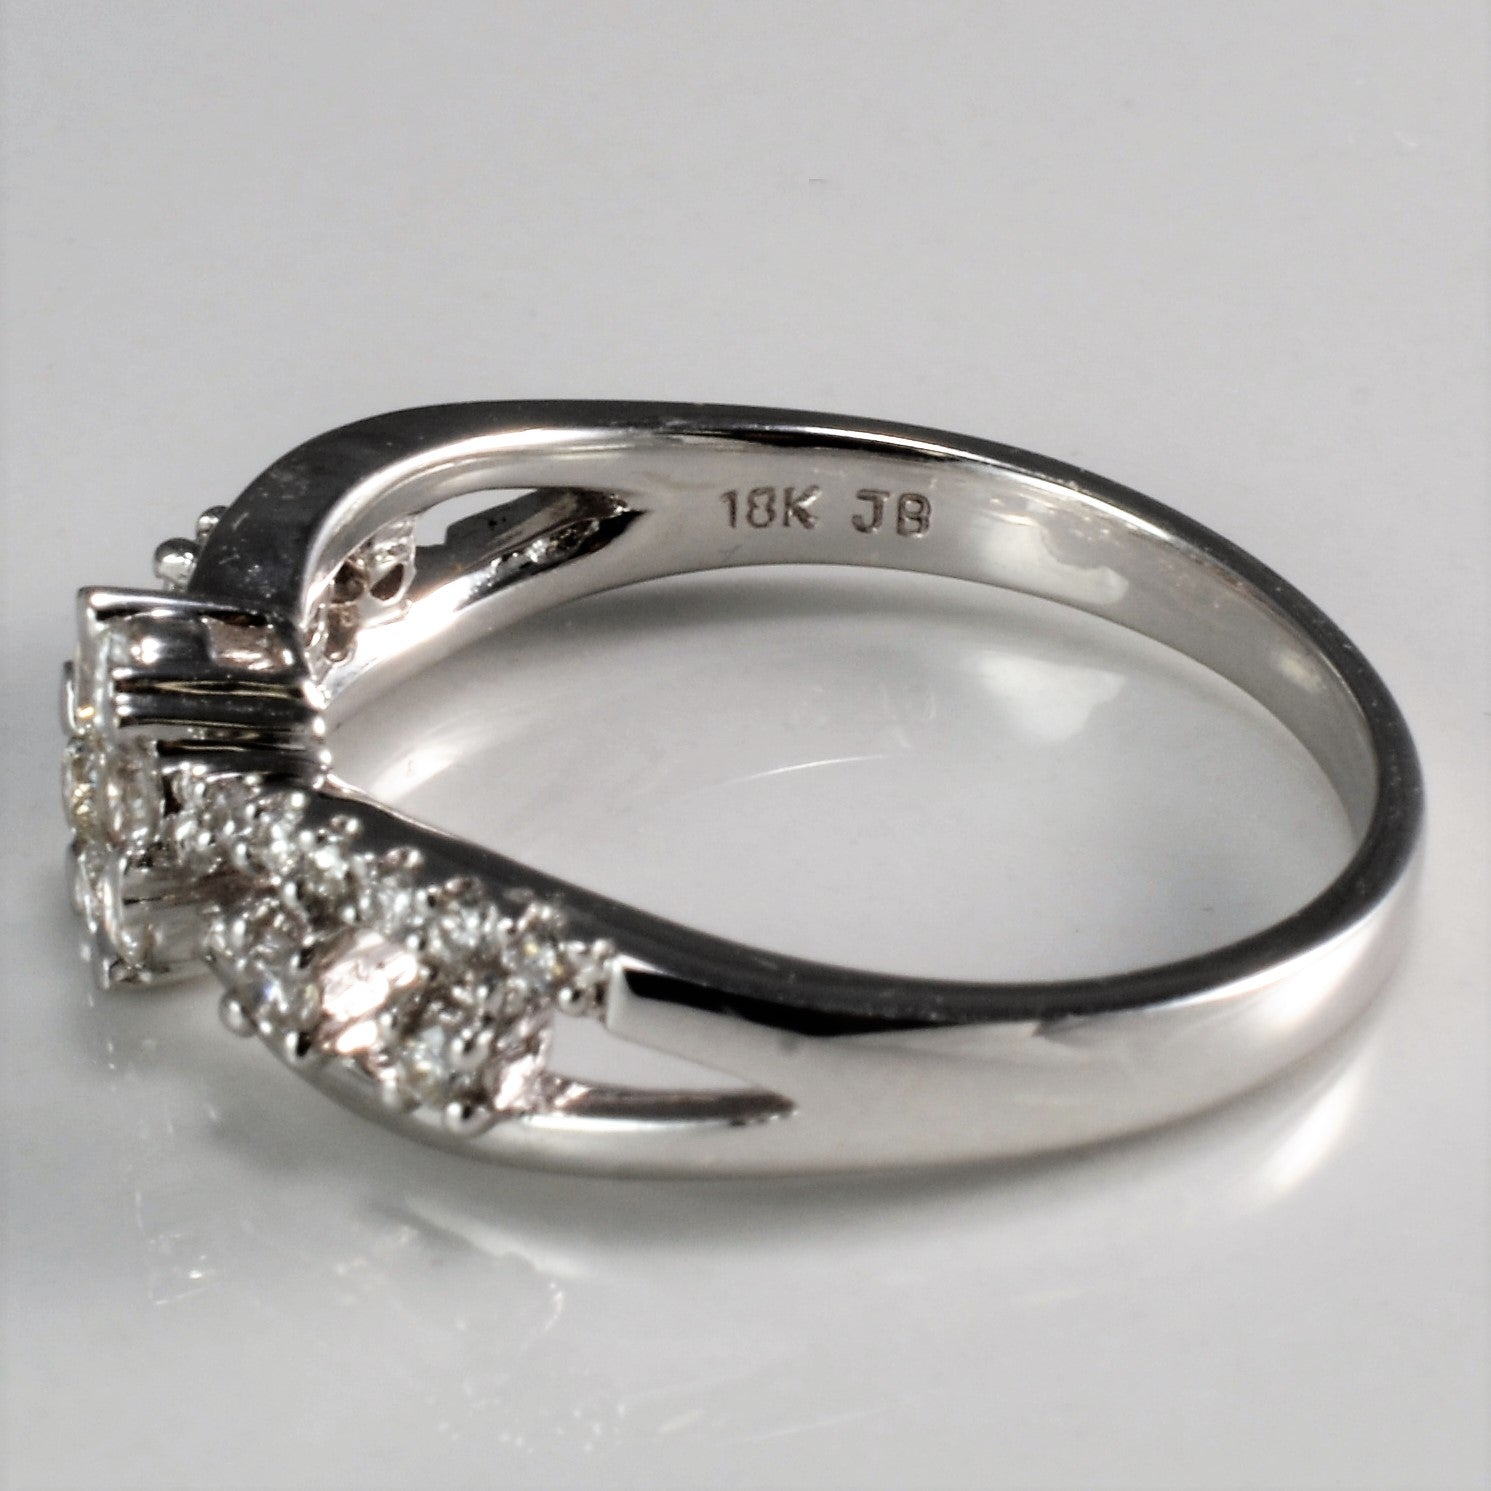 Flower Design Diamond Engagement Ring | 0.40 ctw, SZ 6 |